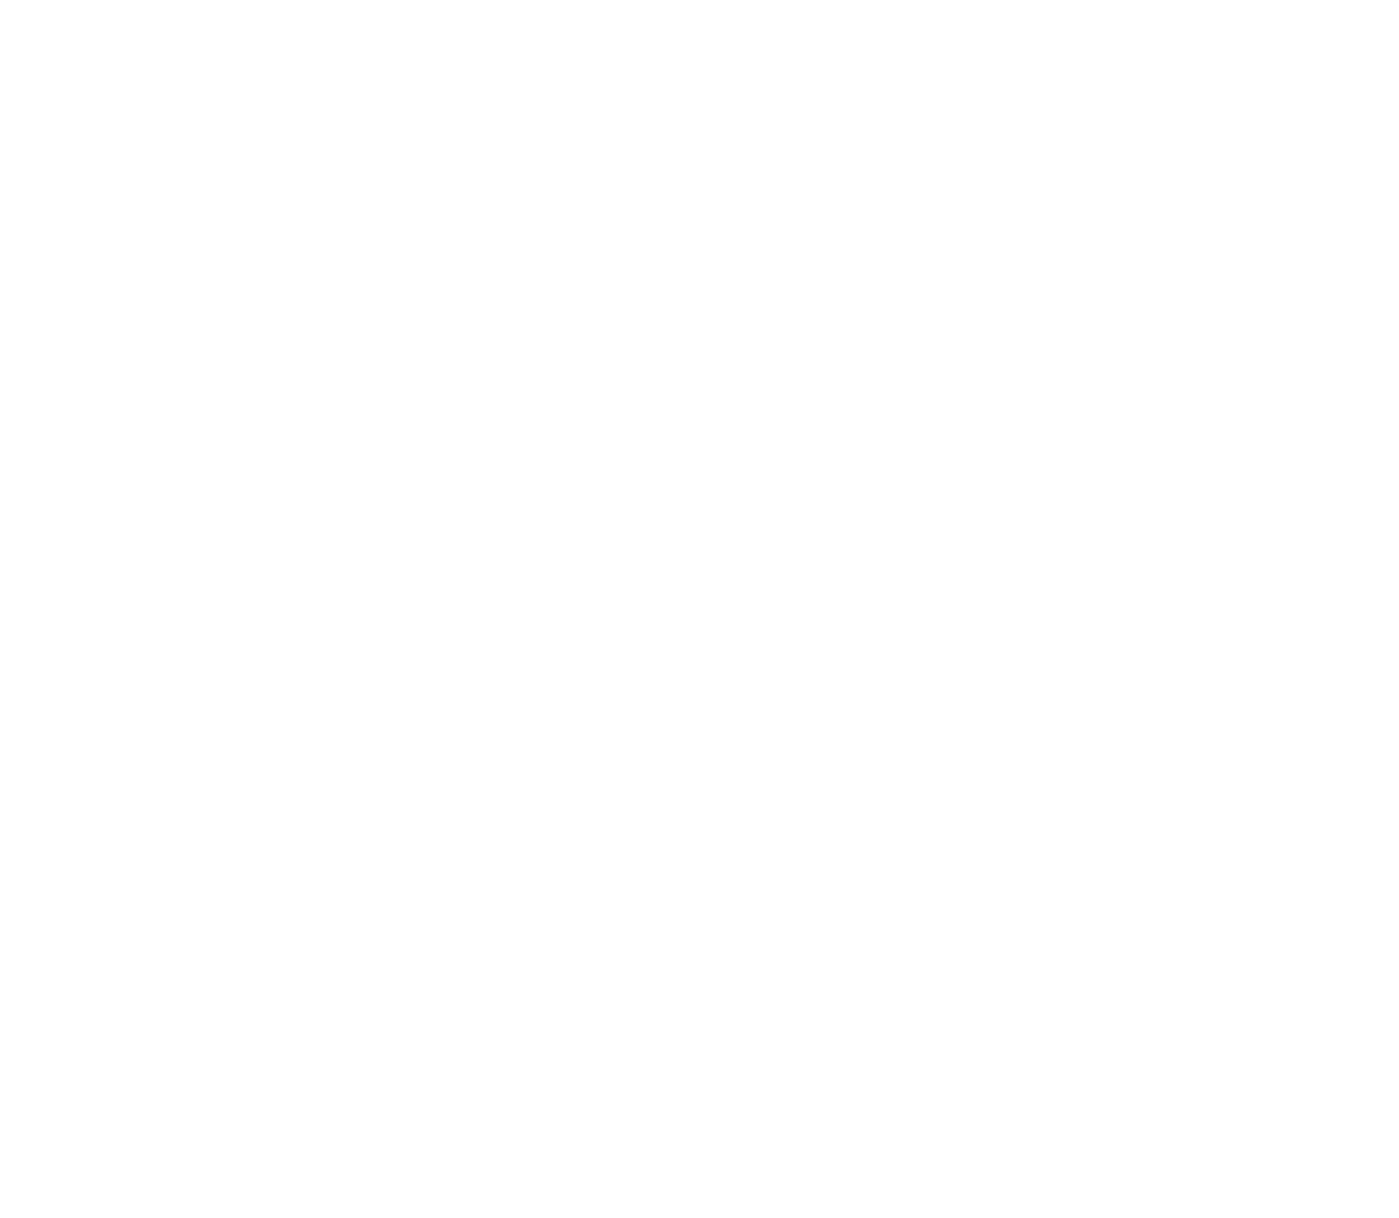 Diversify your portfolio